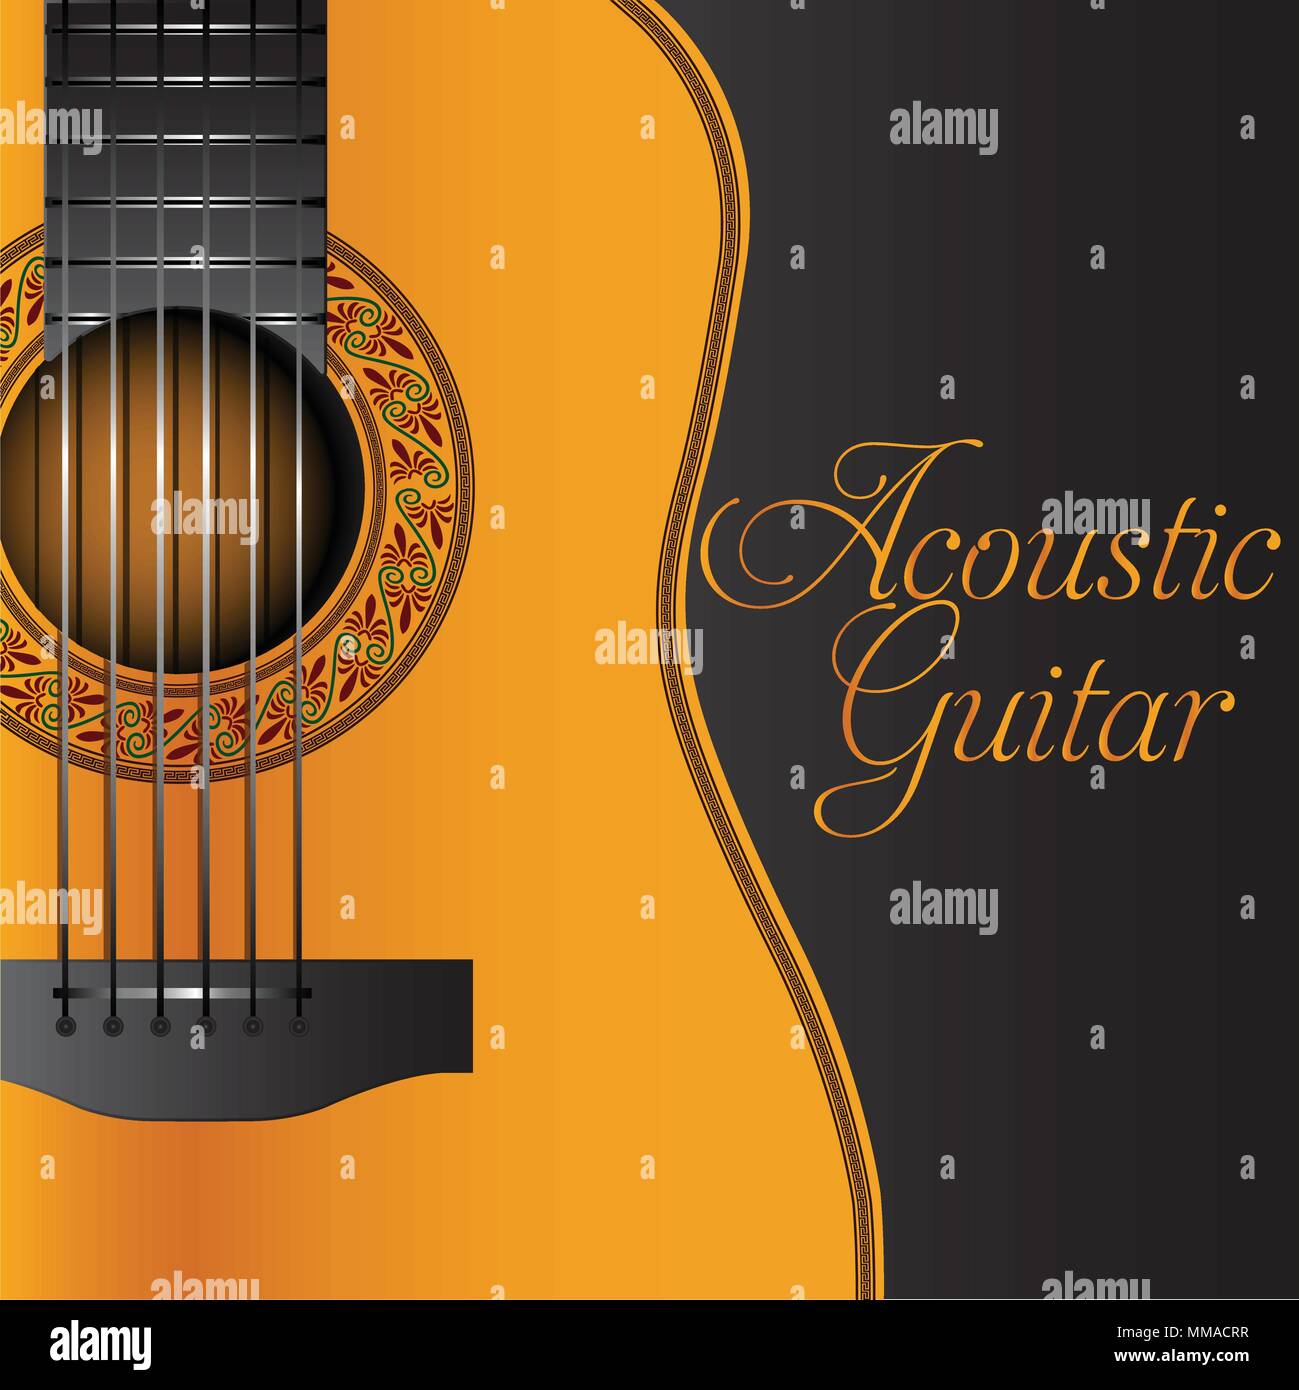 Acoustic Guitar album cover Stock Vector Image & Art - Alamy